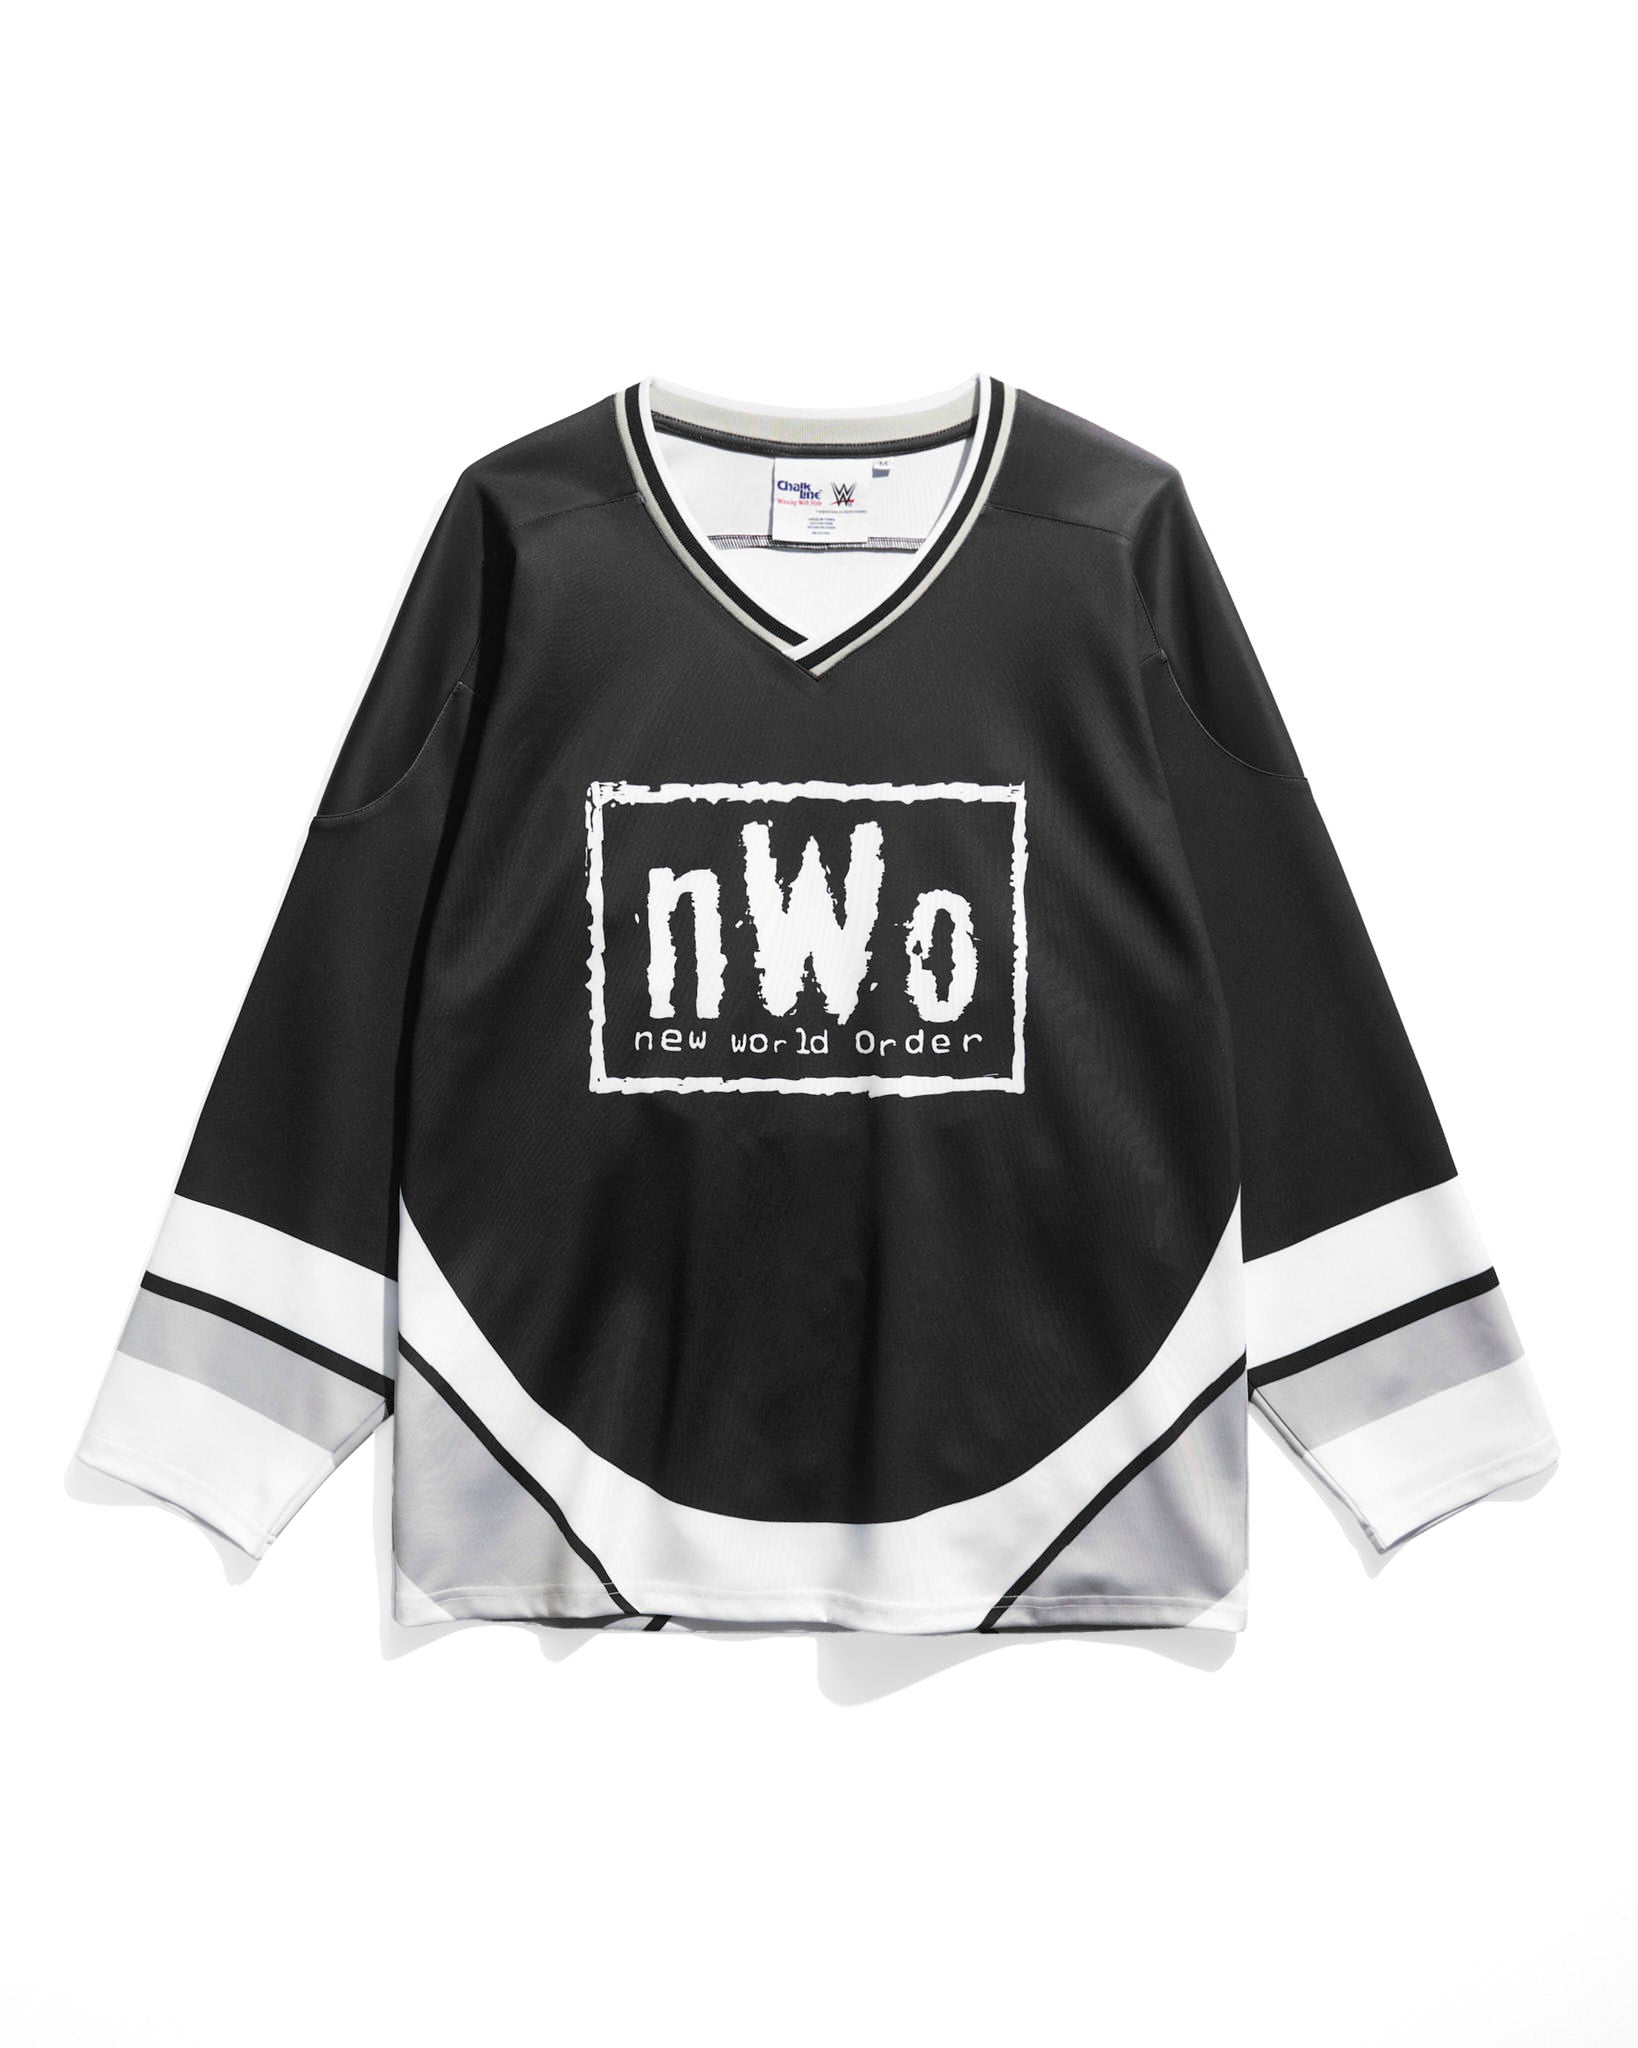 Ultimate Warriors White Hockey Jersey